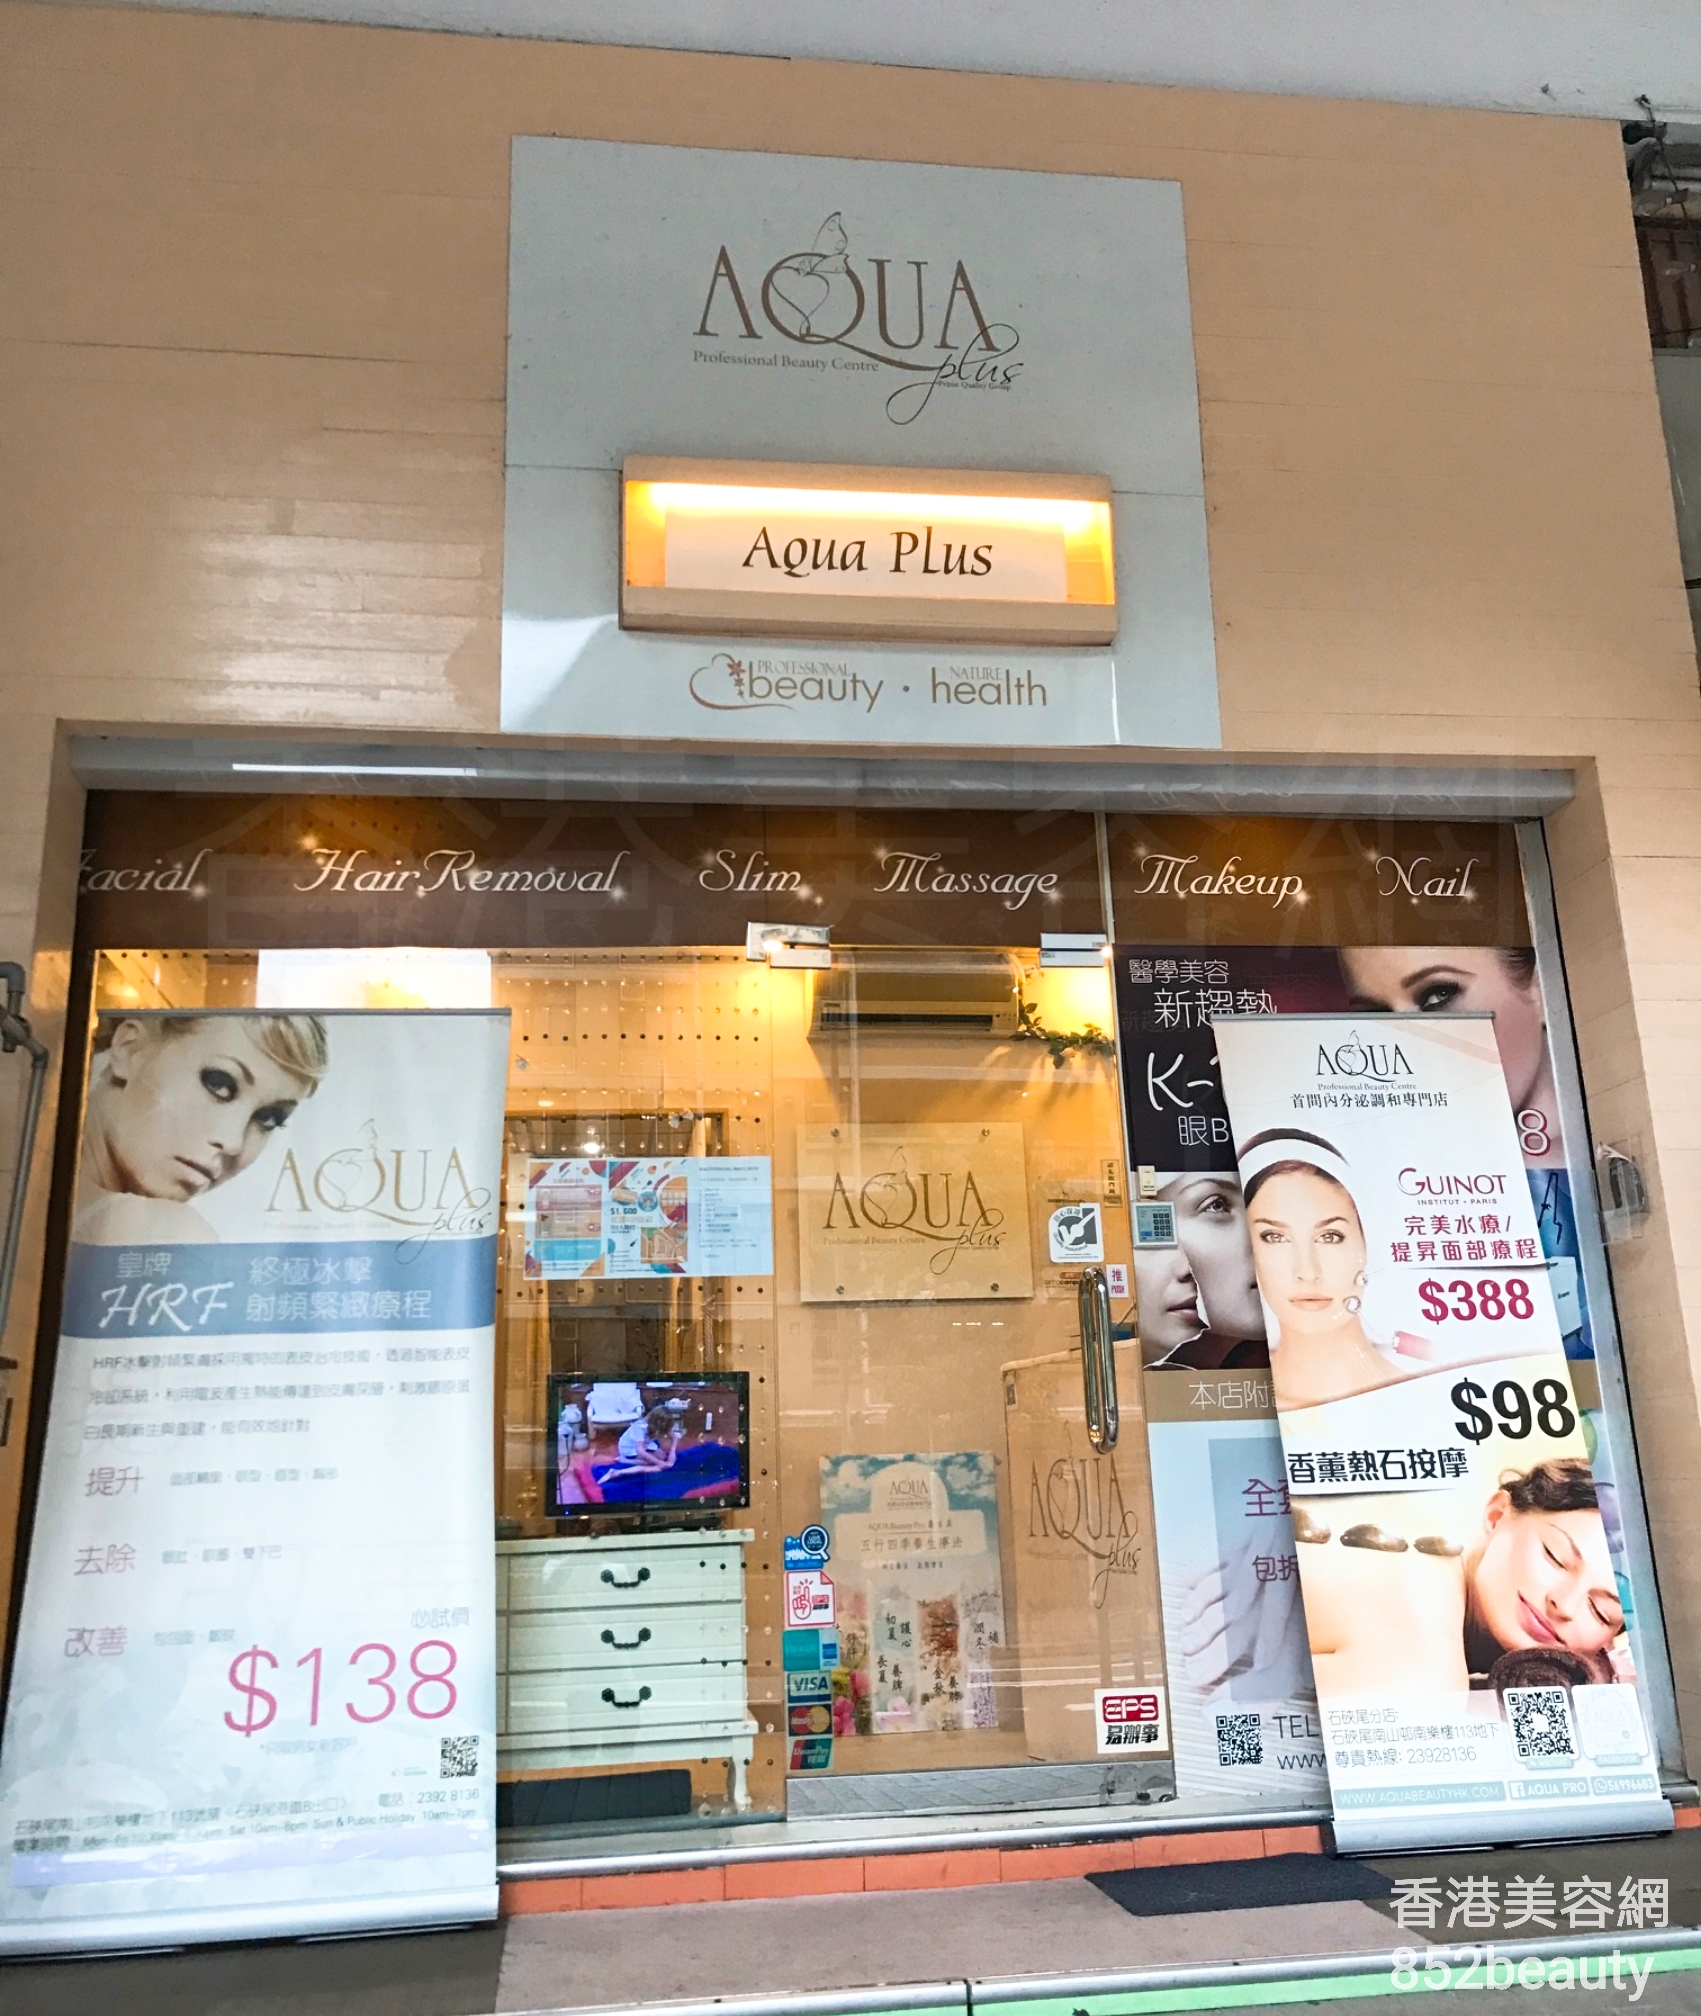 香港美容網 Hong Kong Beauty Salon 美容院 / 美容師: AQUA Professional Beauty Centre (石硤尾分店)